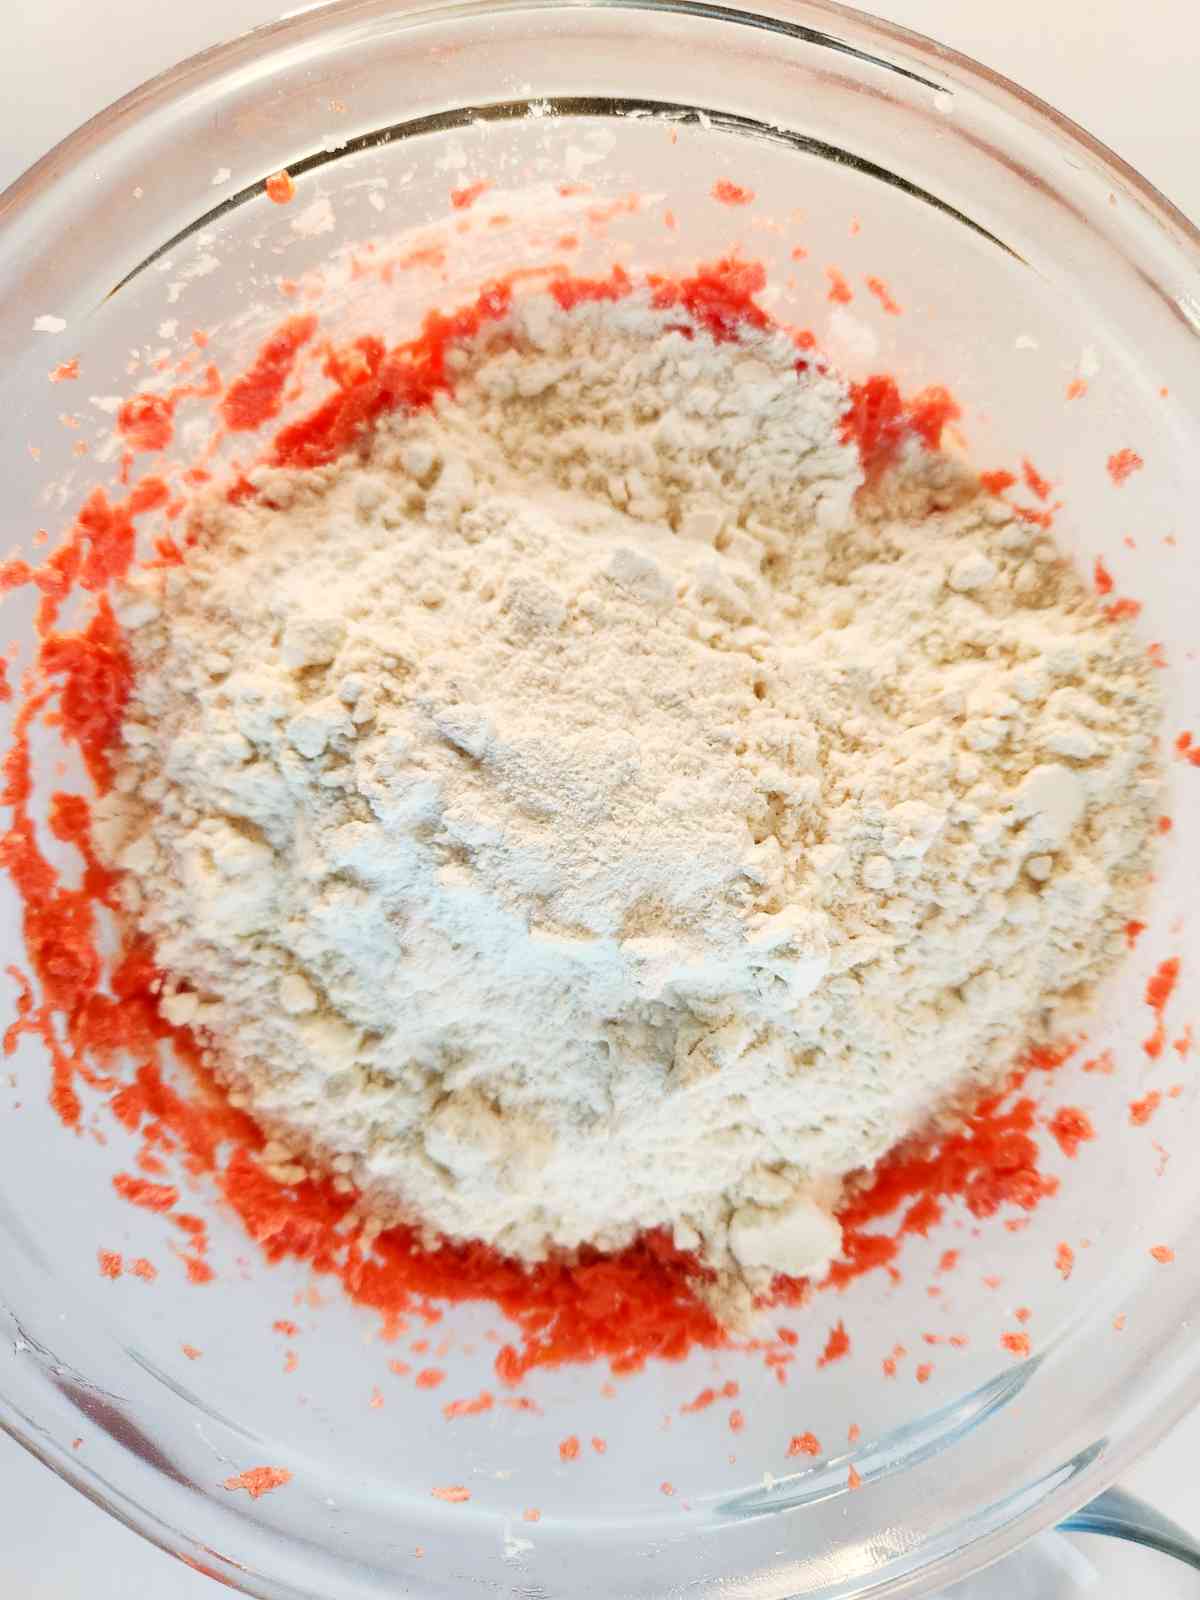 Adding dry ingredients to pink batter.